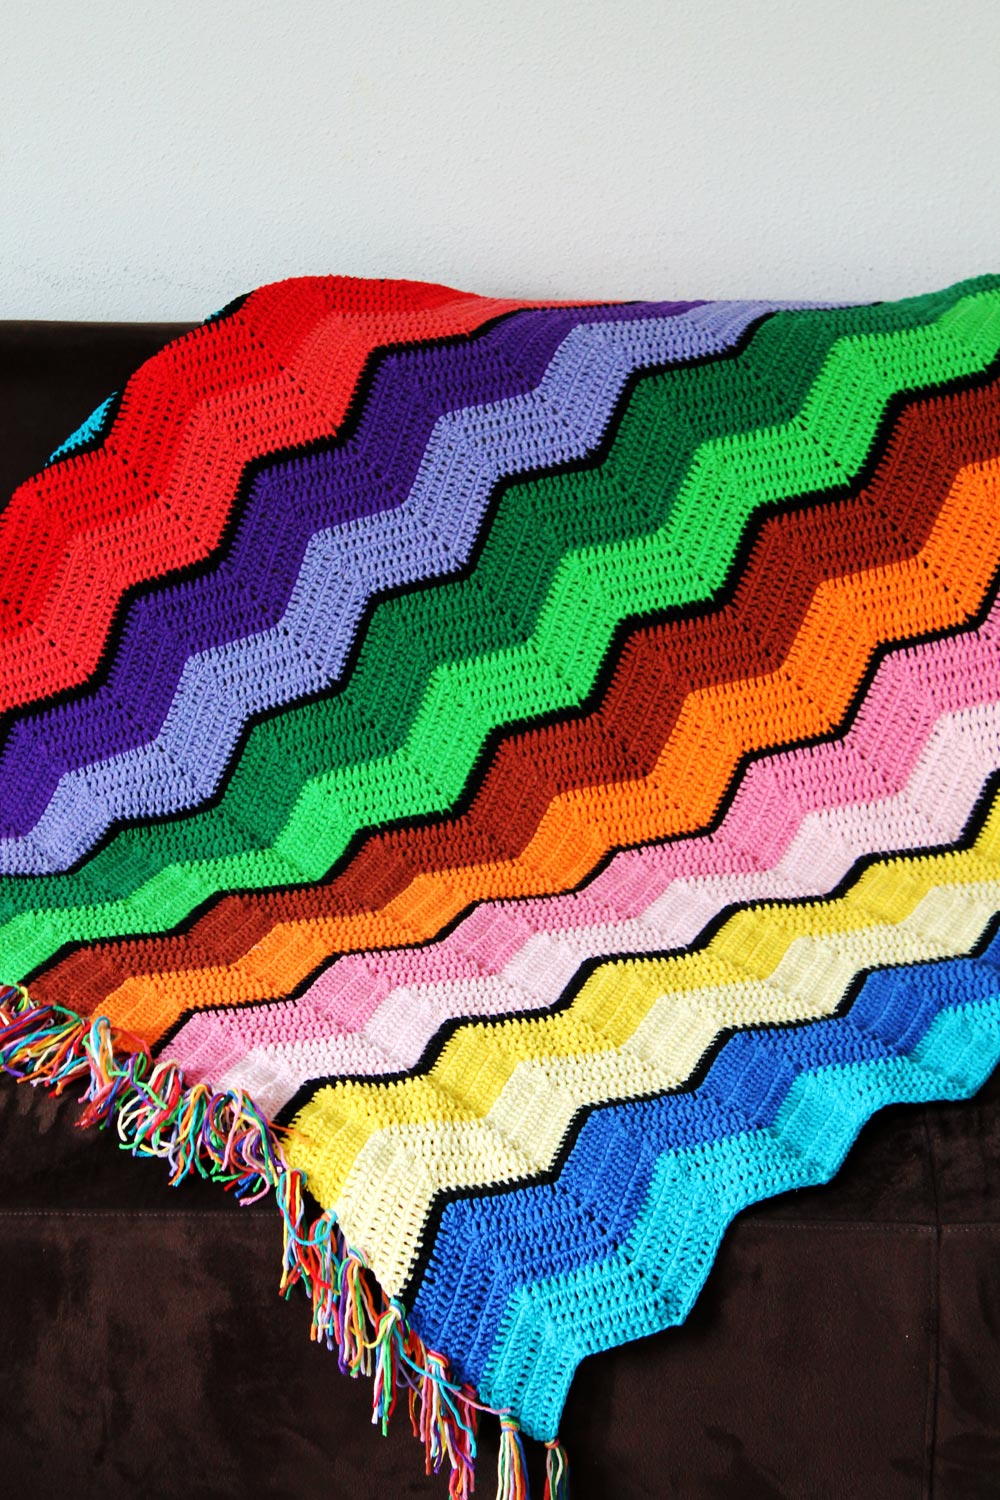 easy crochet afghan patterns for beginners free